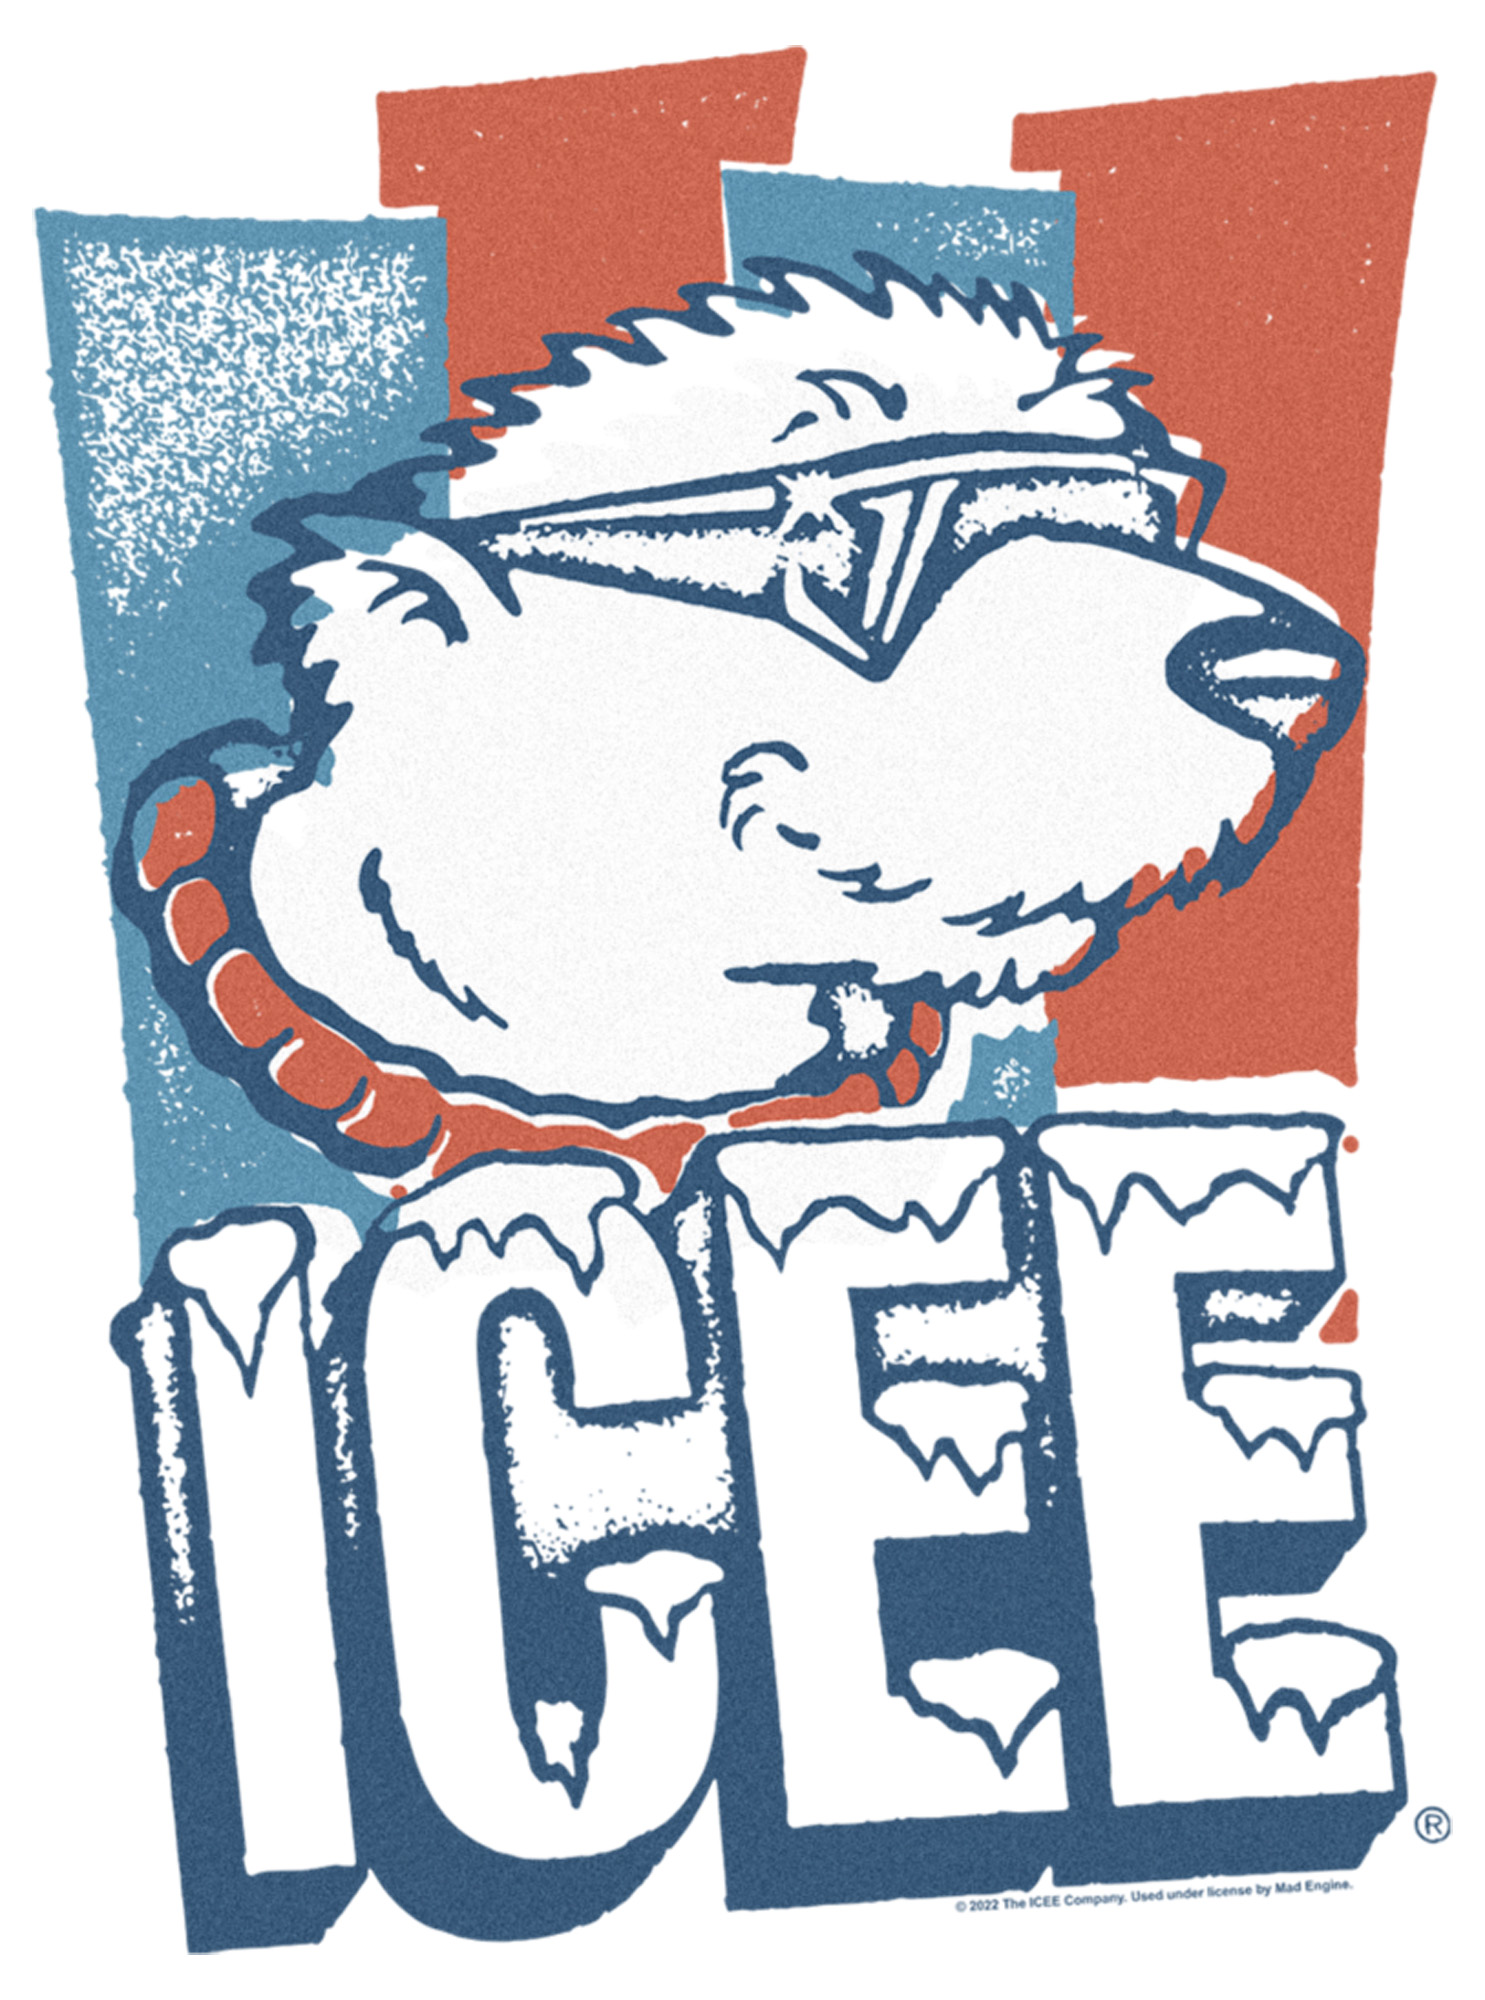 Icee Men's ICEE Bear Retro Logo  Graphic Tee